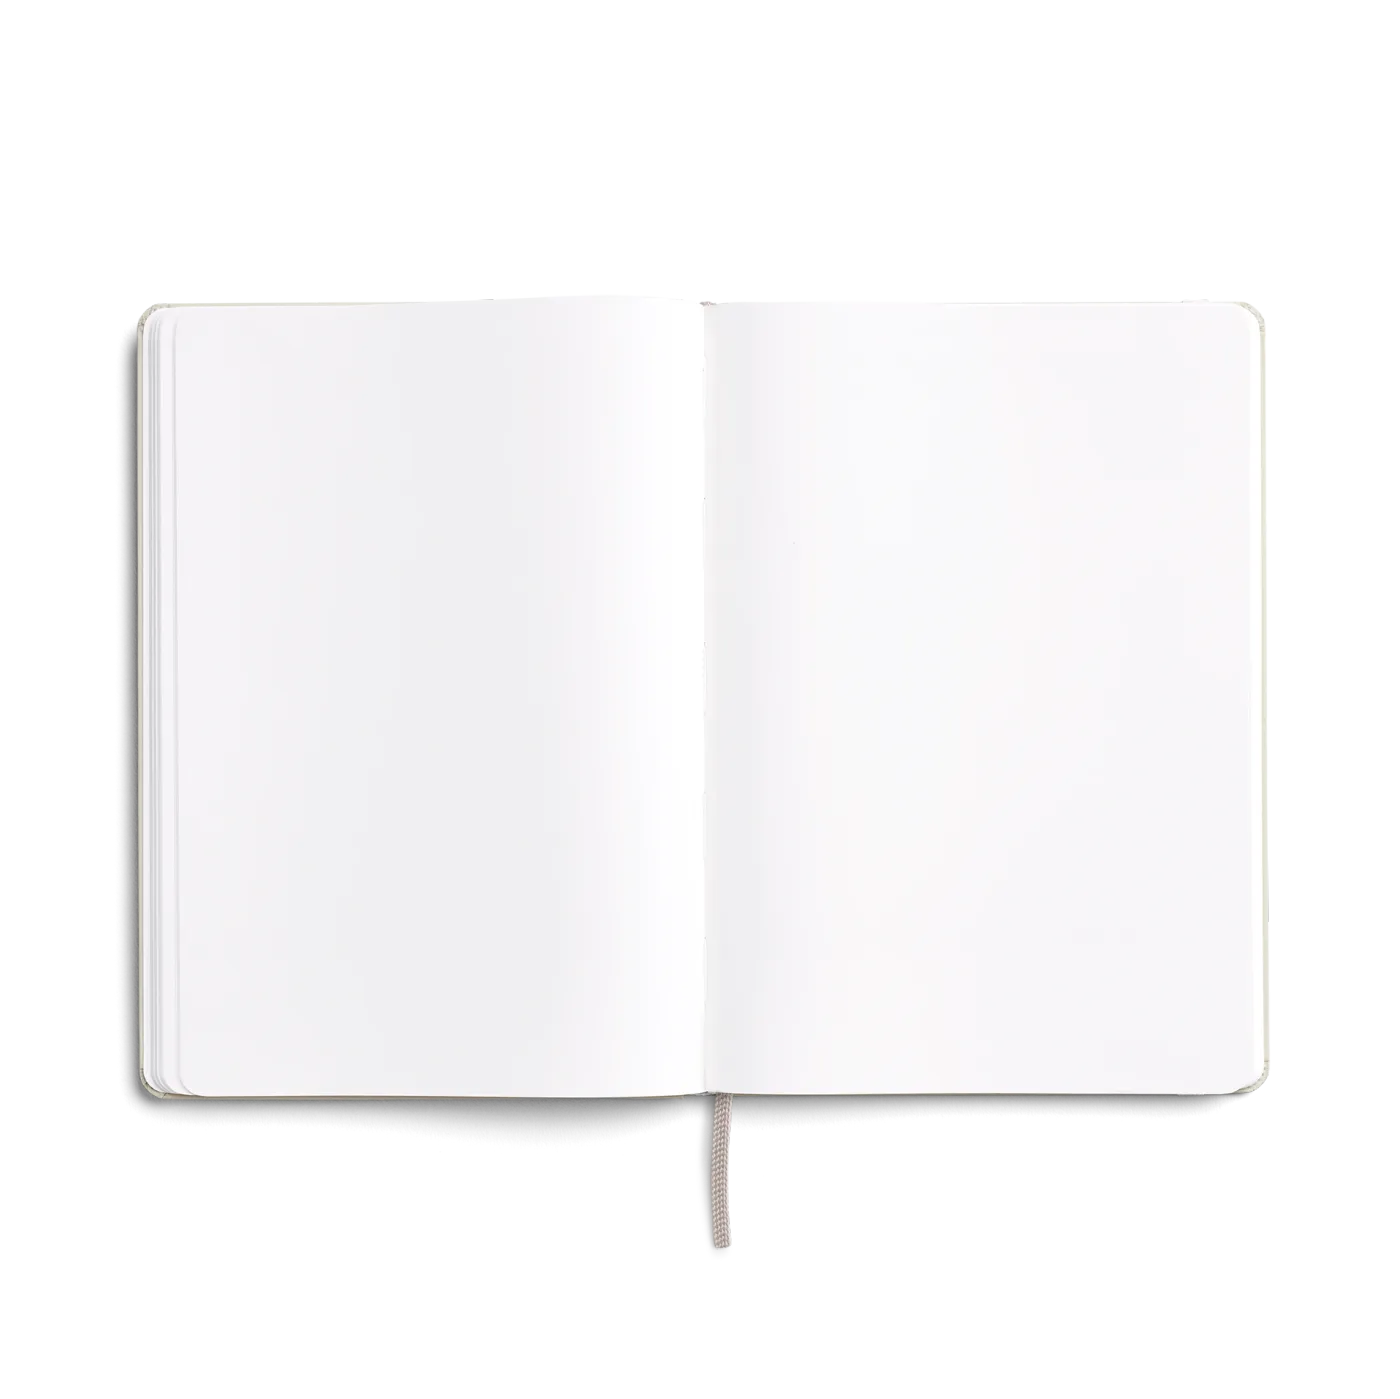 Karst Notizbuch A5 Hardcover – Marineblau (leer)